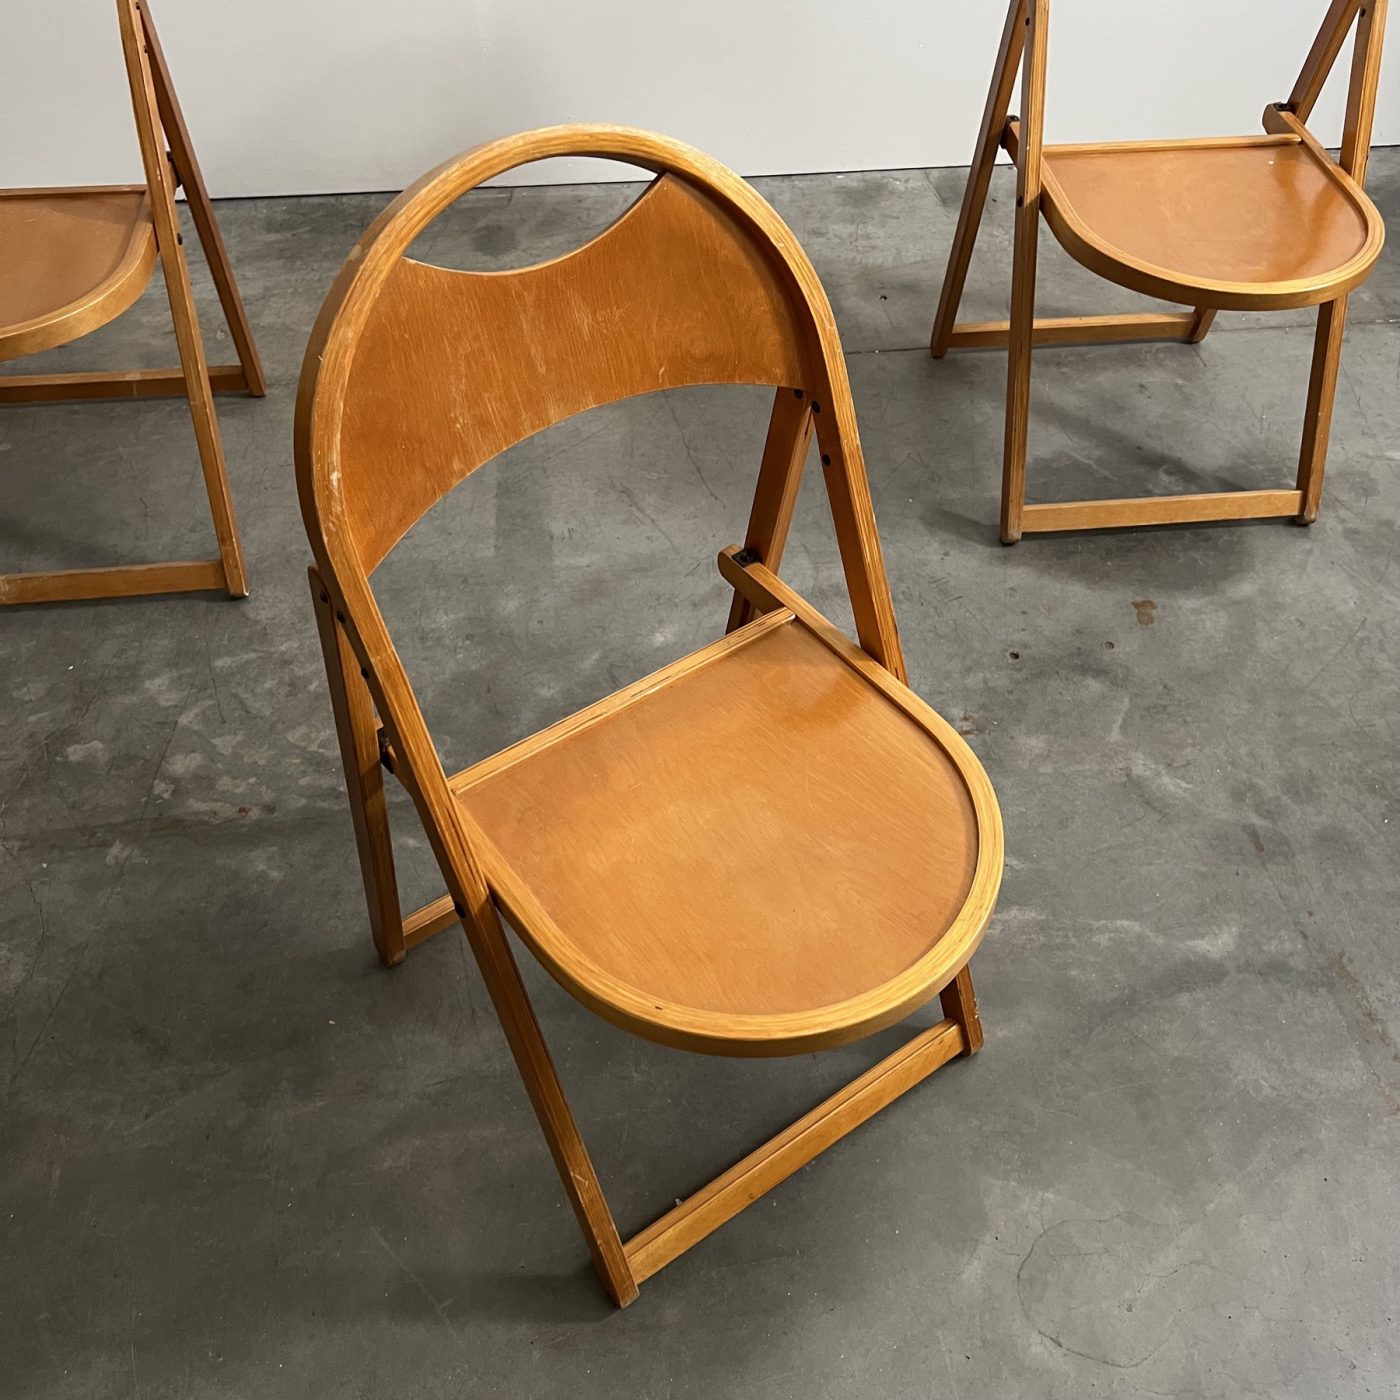 objet-vagabond-folding-chairs0003